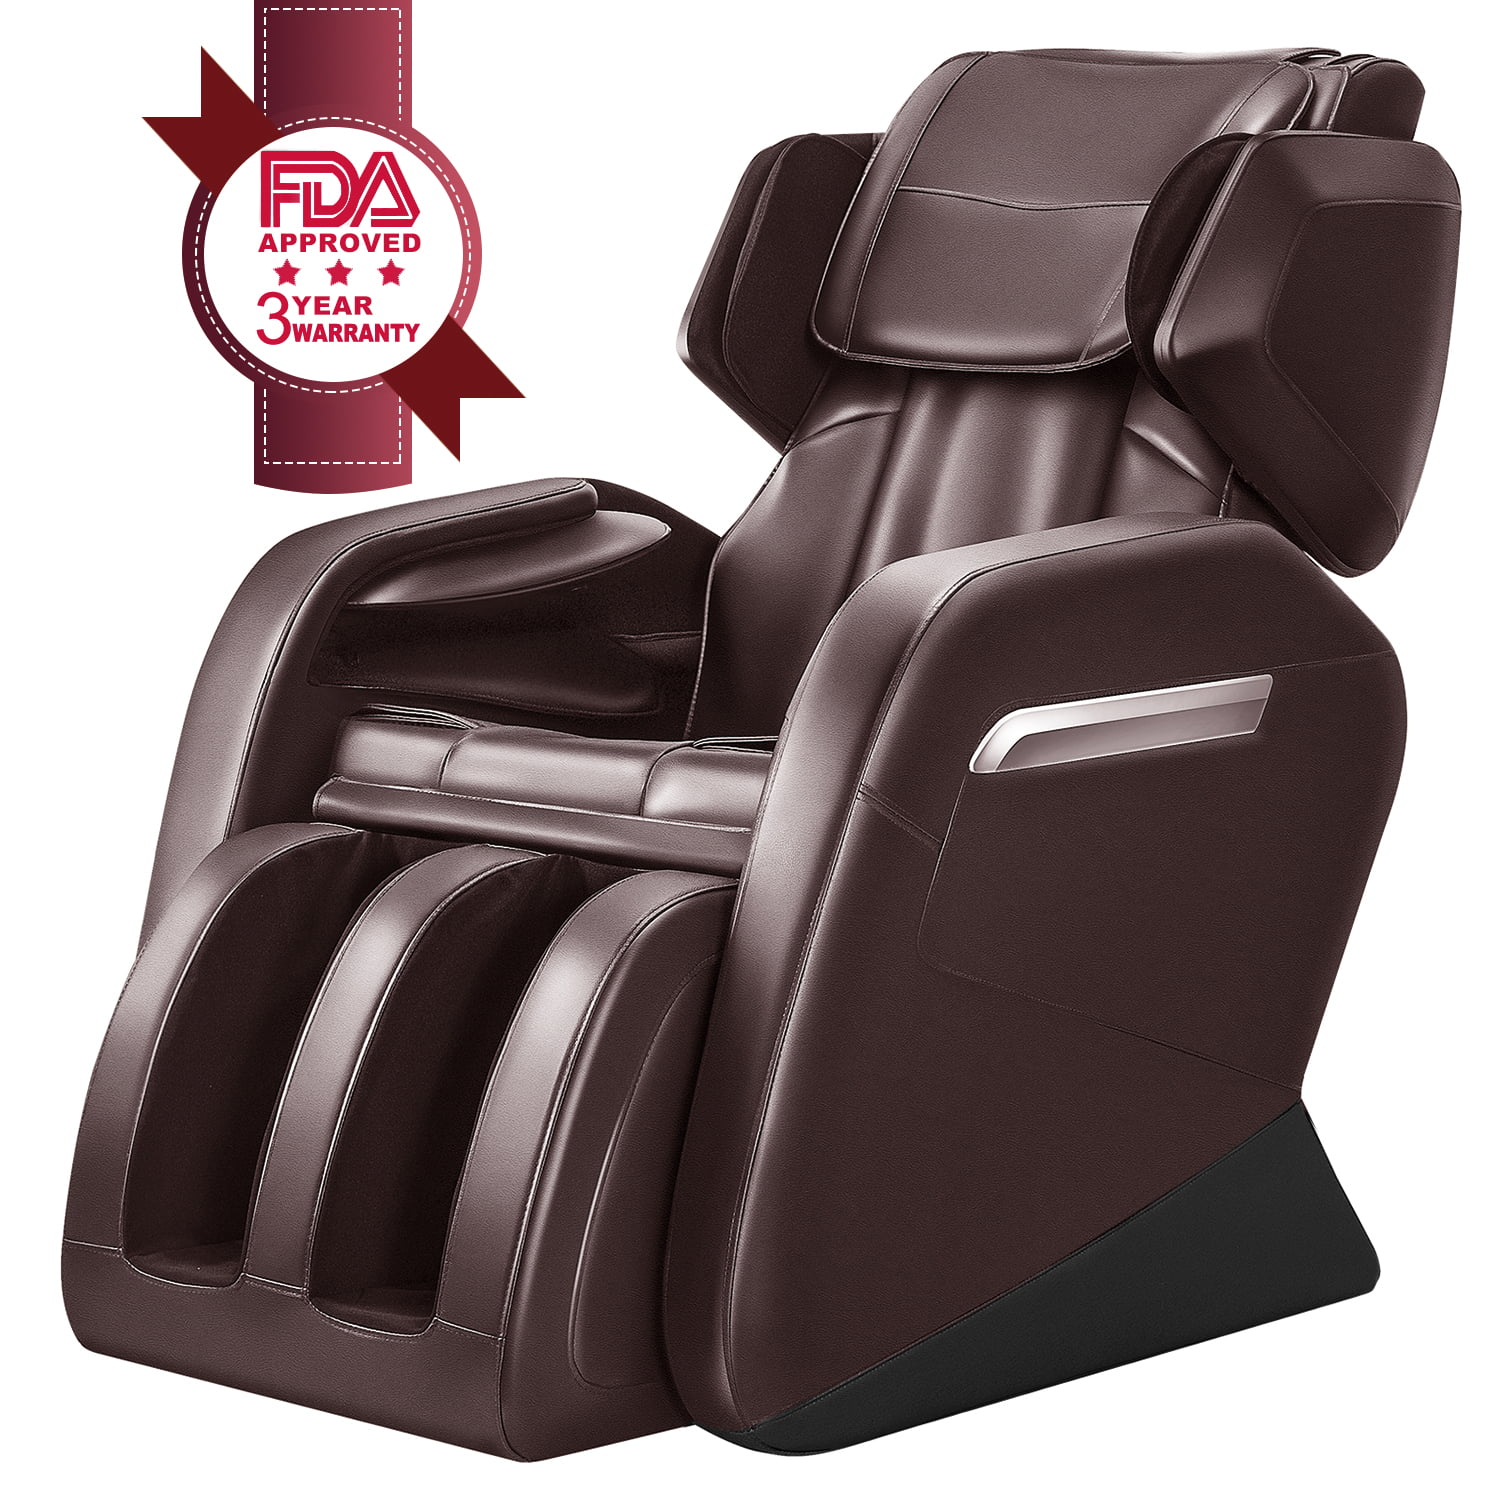 Kaw Zero Gravity Massage Chair Off 75